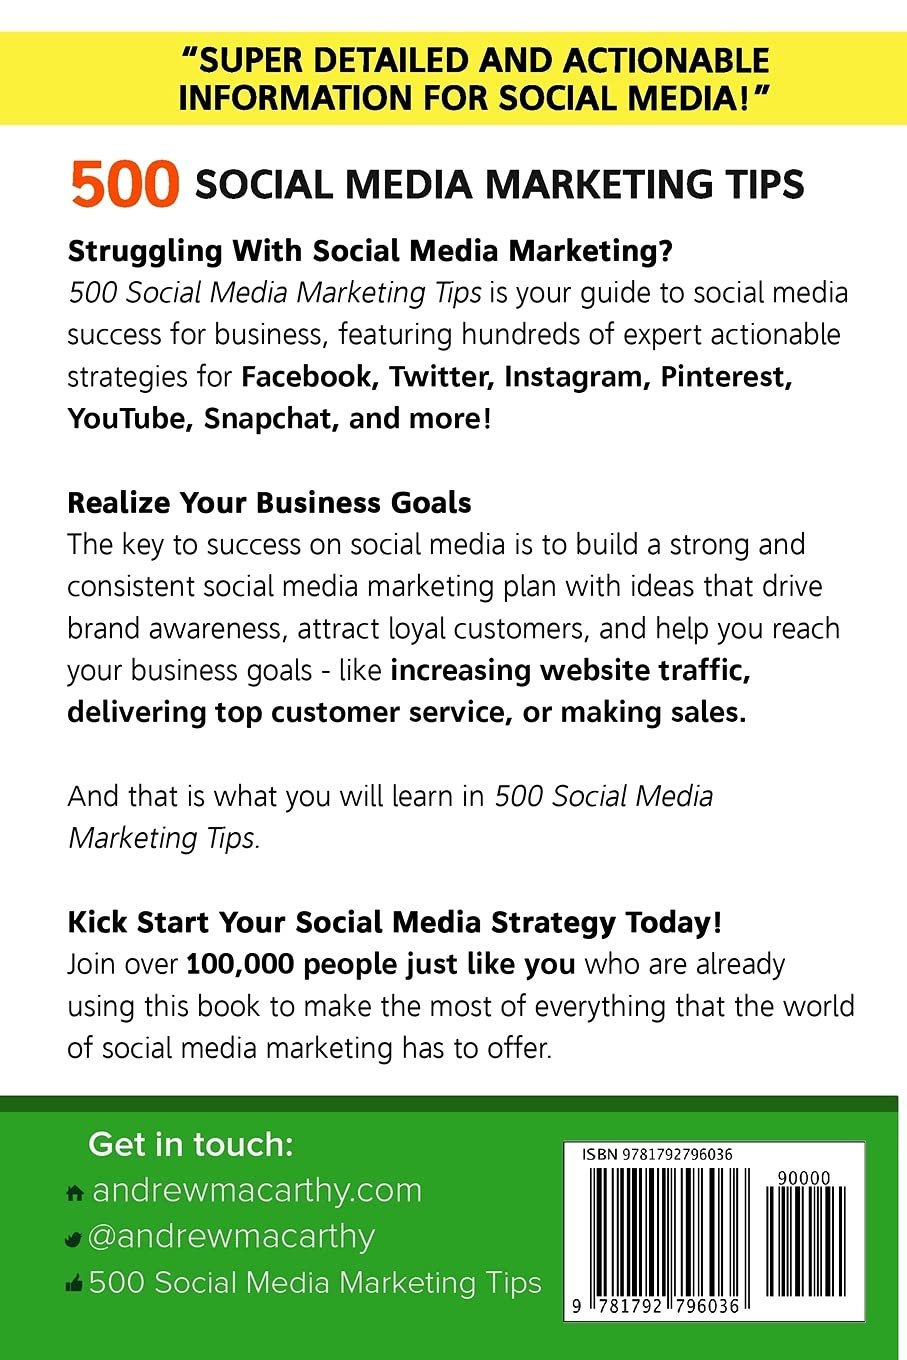 500 Social Media Marketing Tips Review